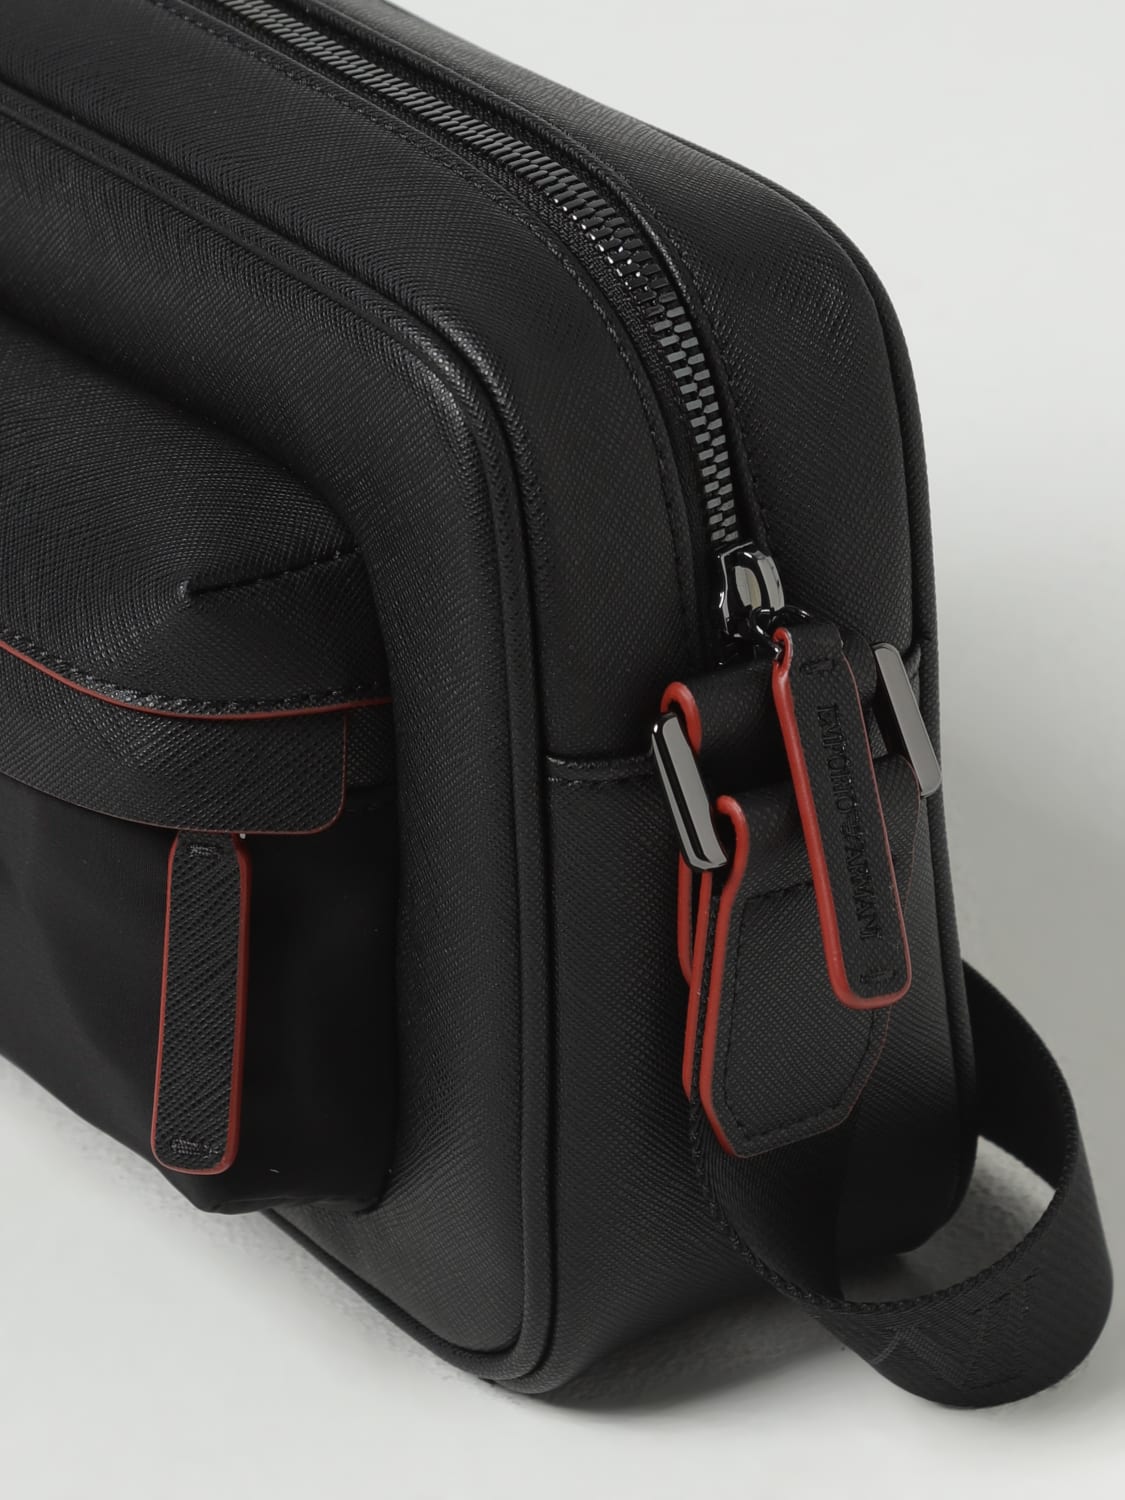 Emporio Armani Men's Leather Shoulder Bag